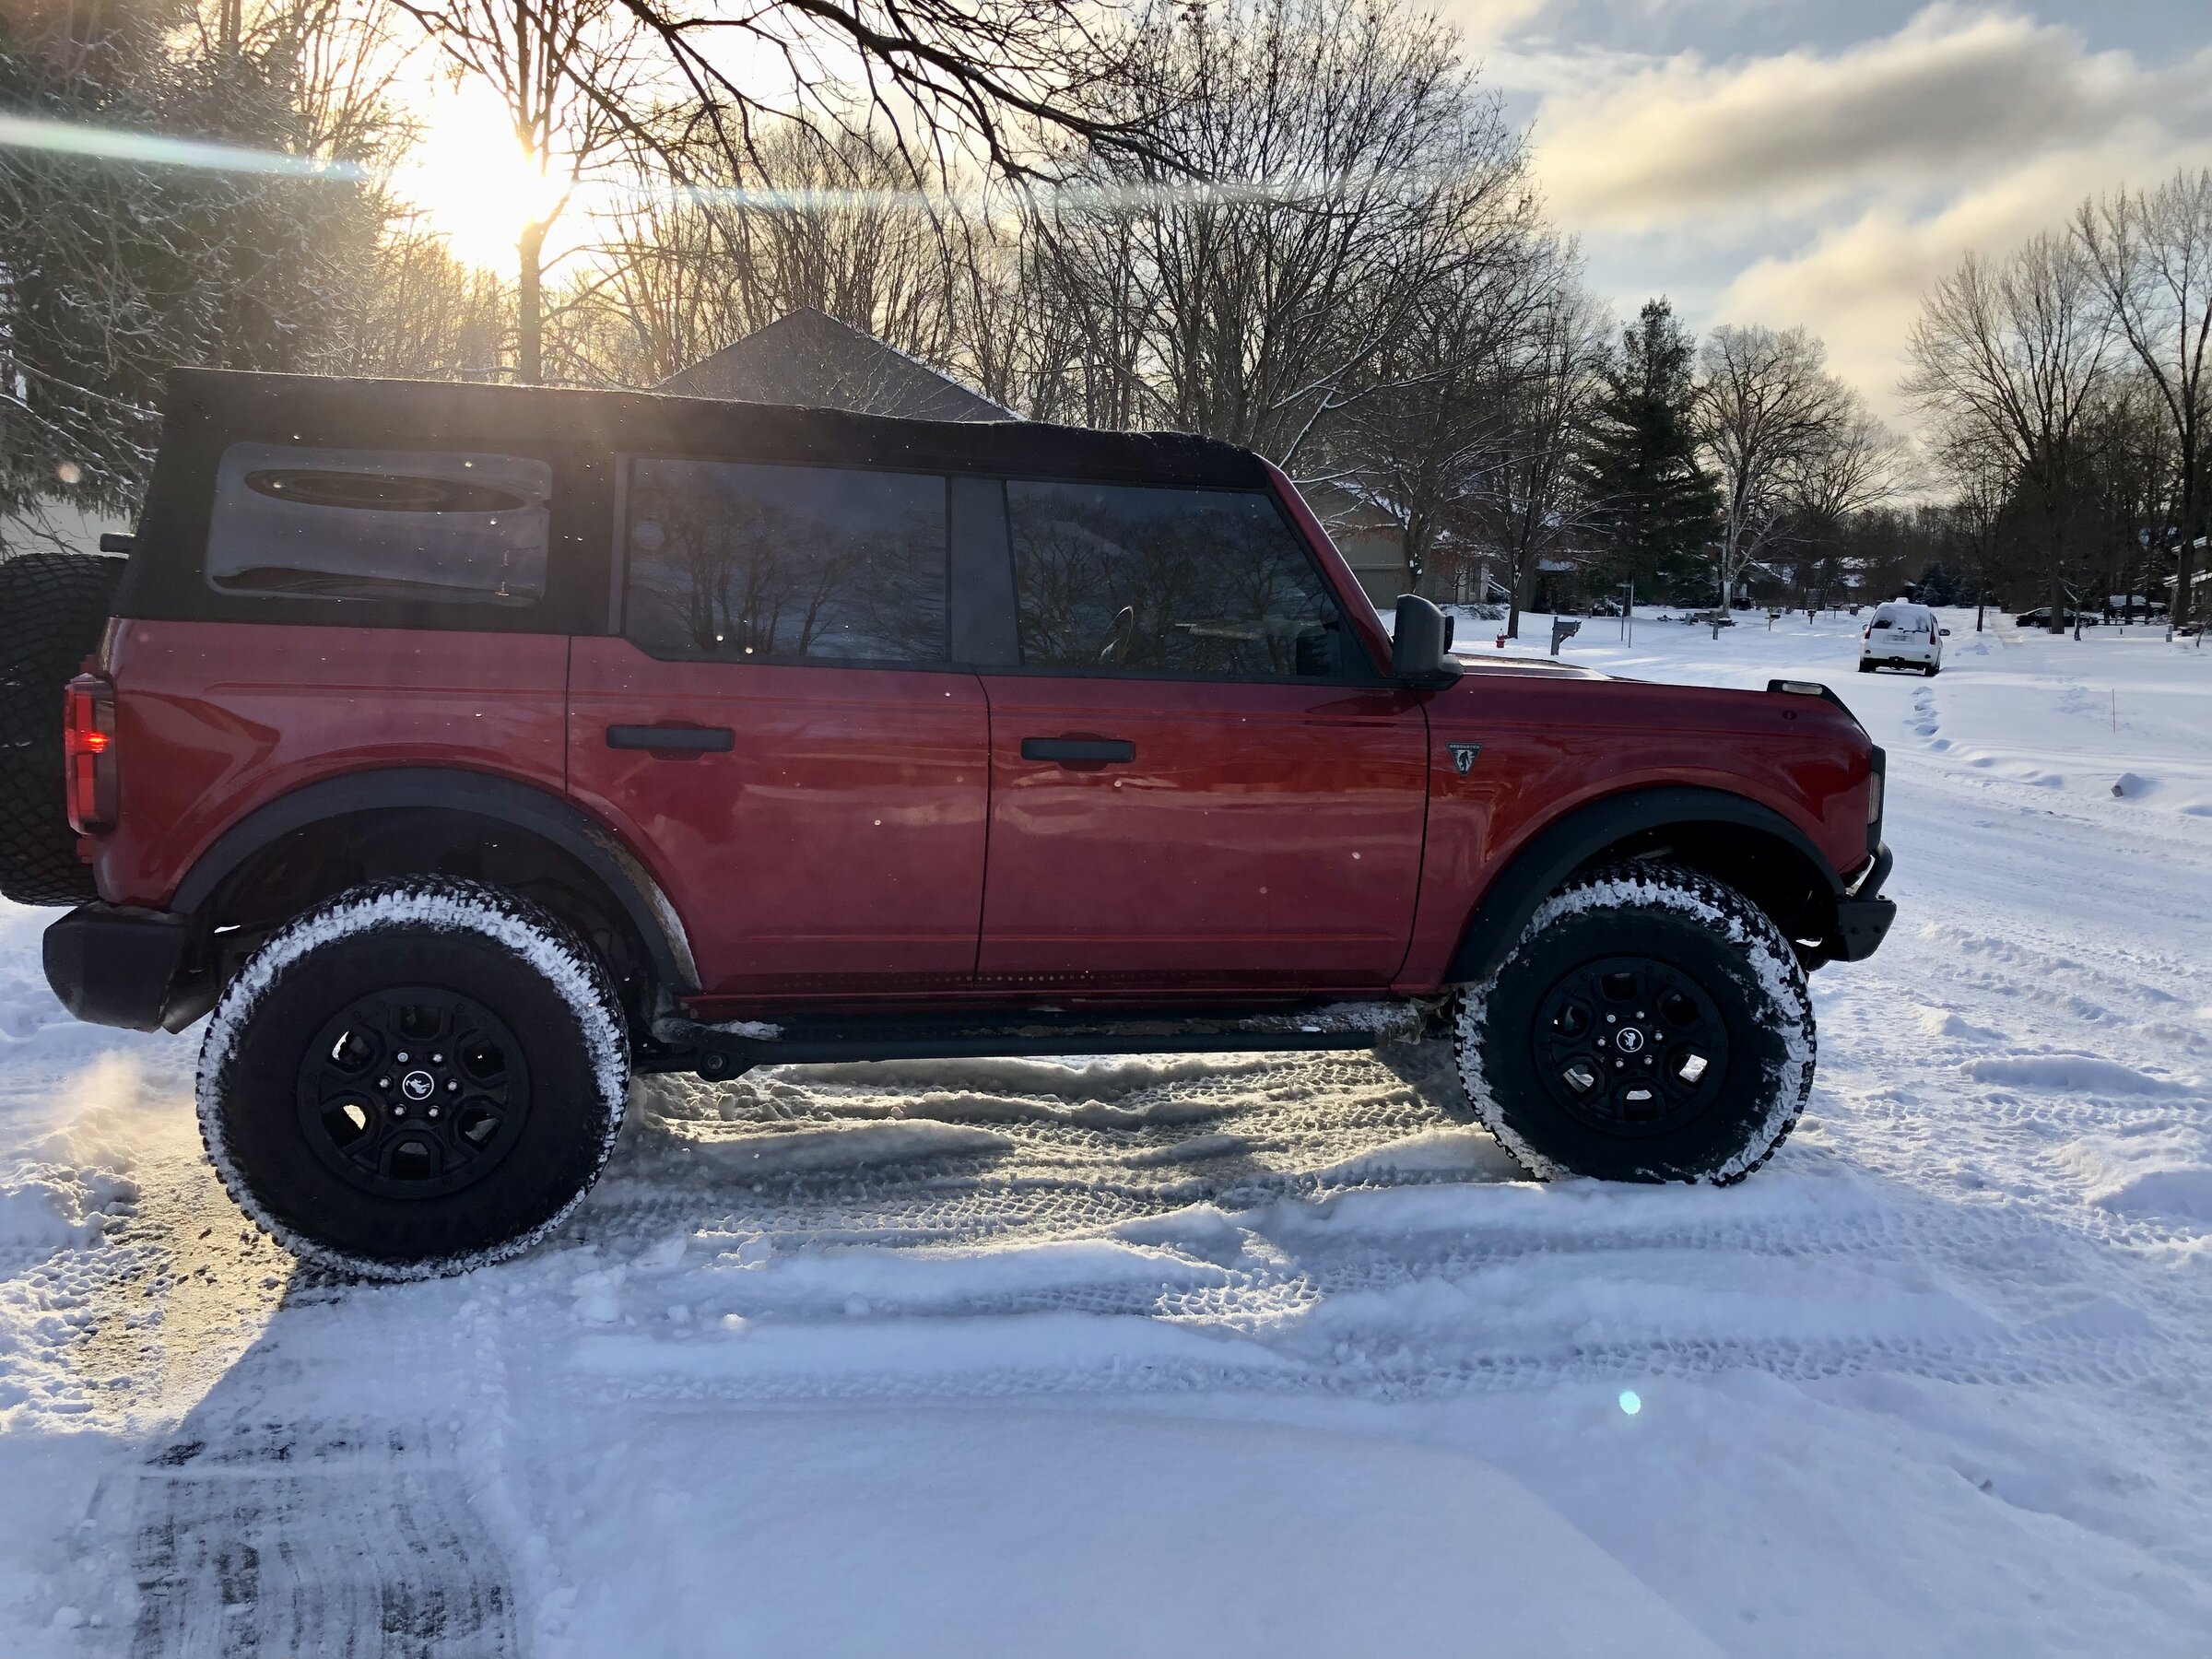 Ford Bronco Share your snowy Bronco pics! 01C3585B-4534-4B92-AD29-CE97450E2449